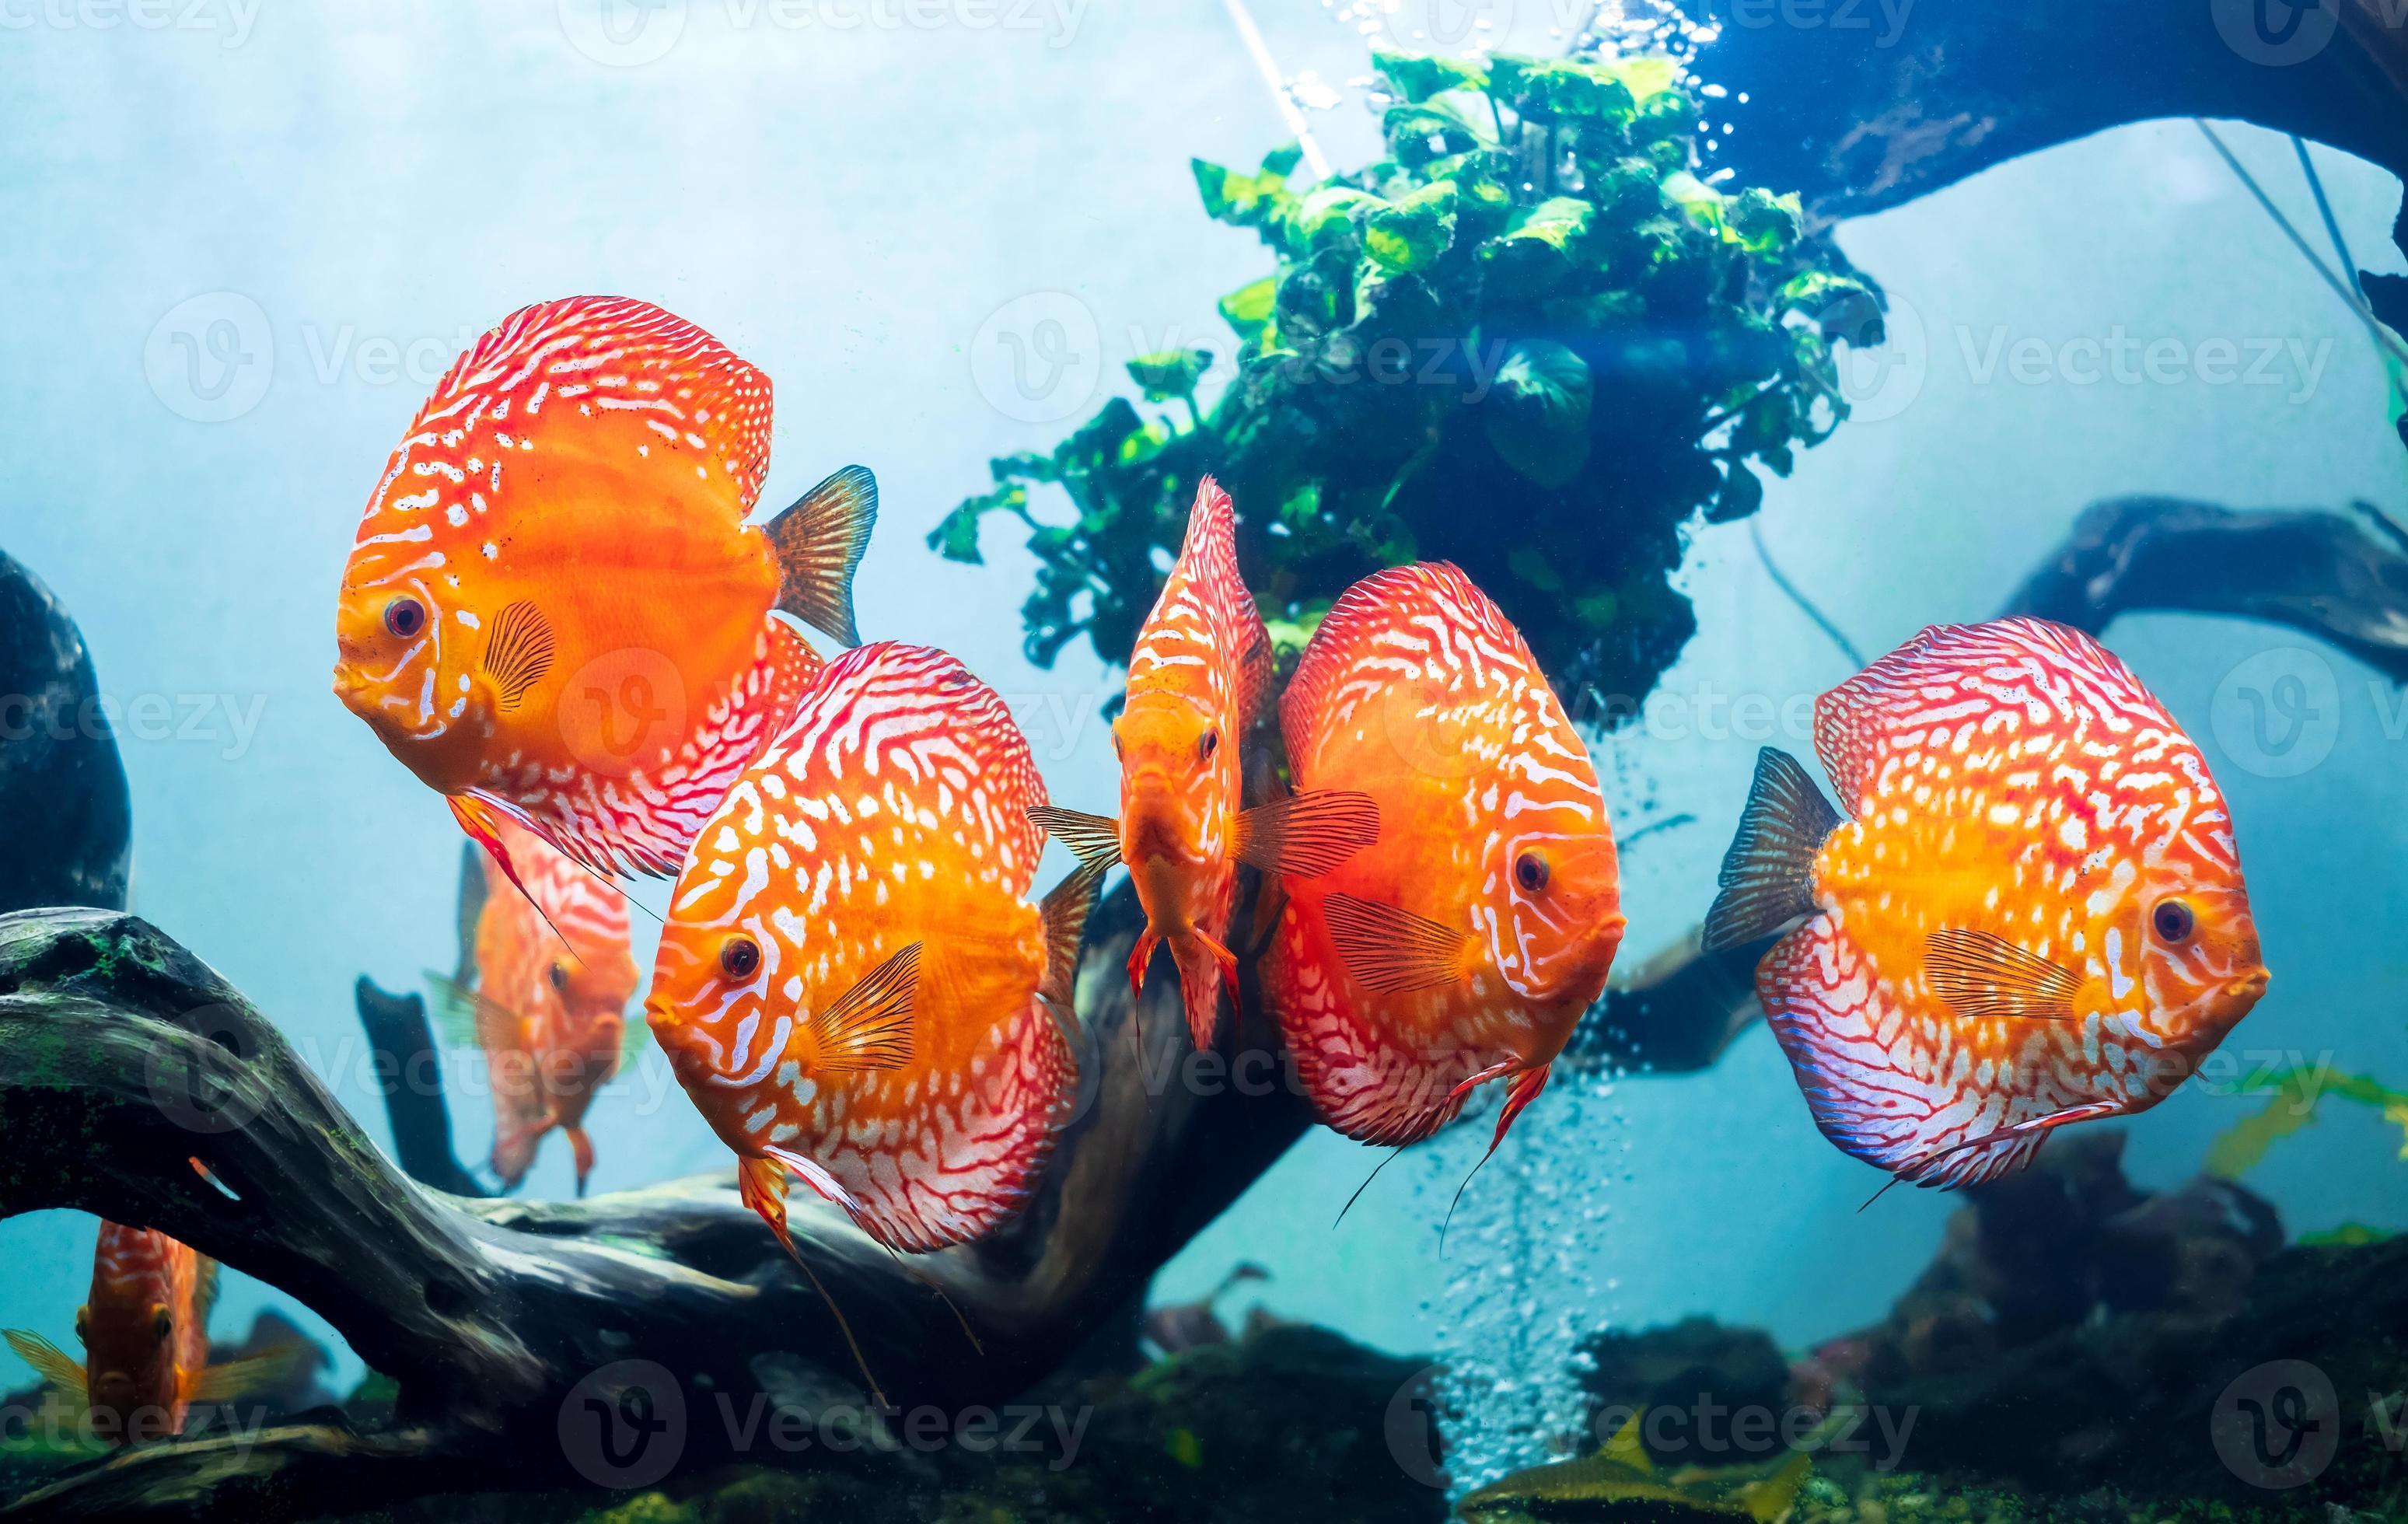 Stratford on Avon Goed 945 kleurrijke discus, pompadour vissen zwemmen in aquarium. symphysodon  aequifasciatus is Amerikaanse cichliden afkomstig uit de Amazone-rivier,  Zuid-Amerika, populair als zoetwateraquariumvissen. 7972827 Stockfoto